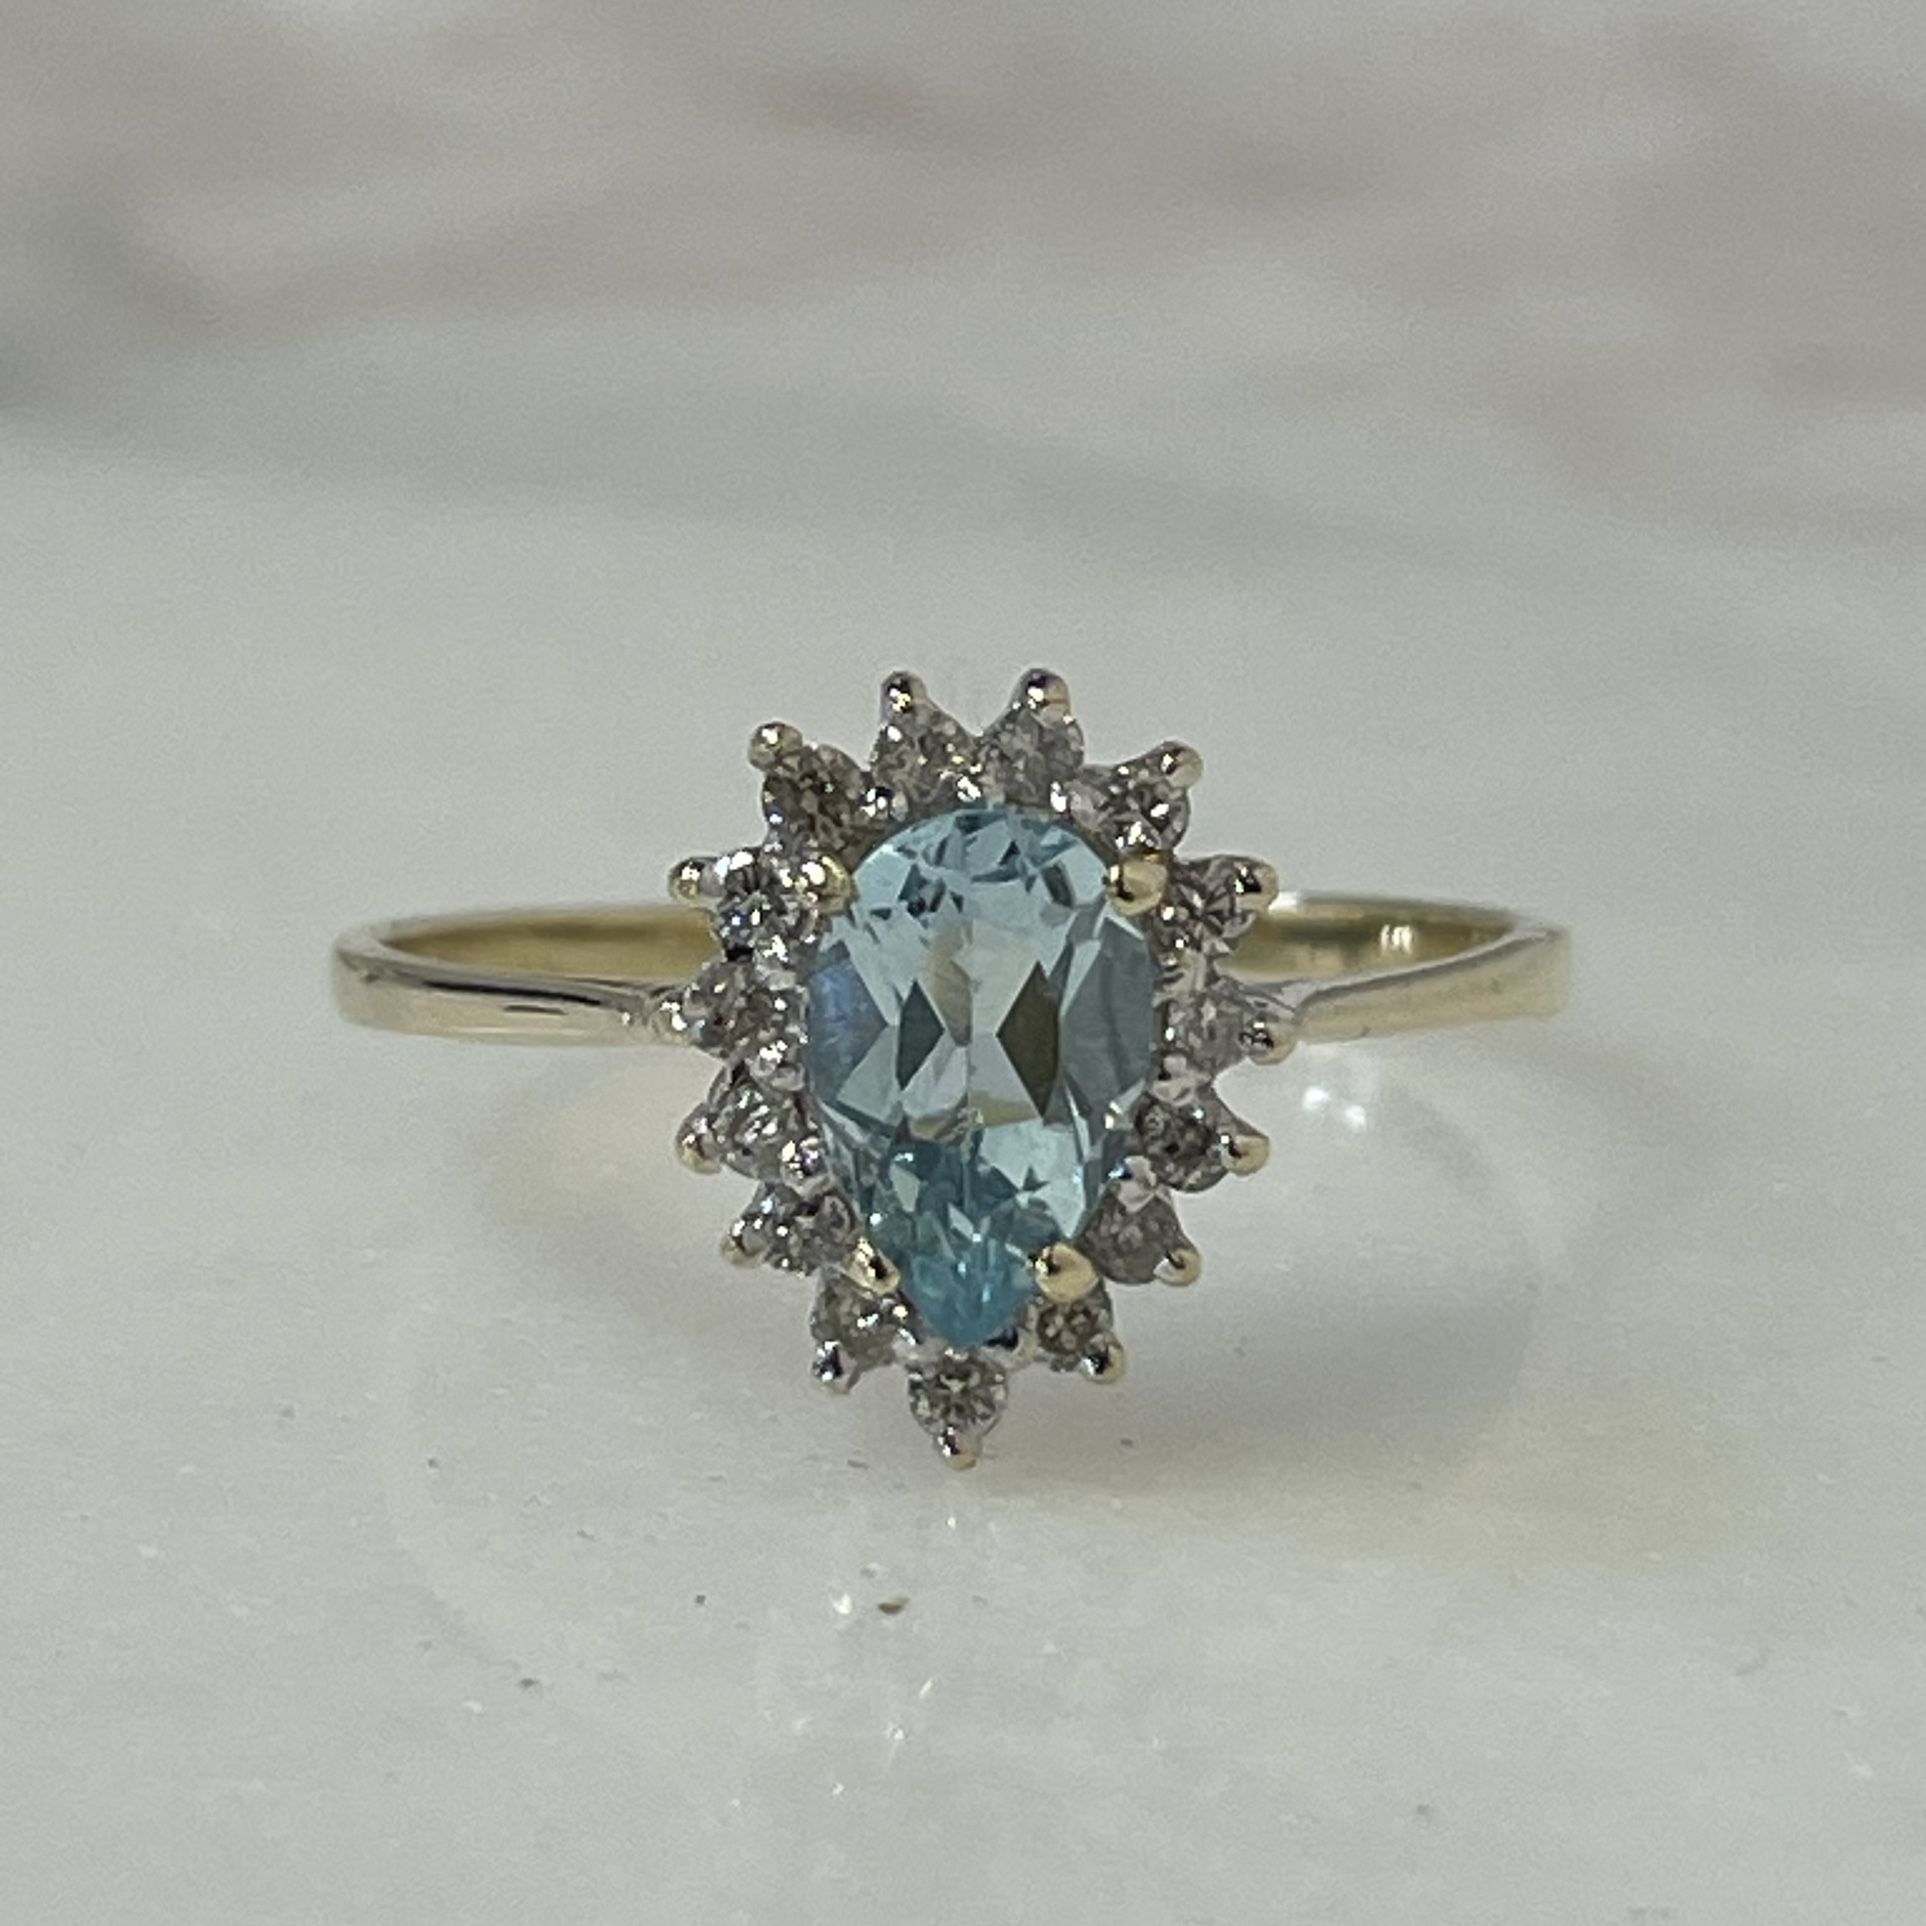 14k Aqua Colored Stone Ring for Sale in Stuart, FL - OfferUp